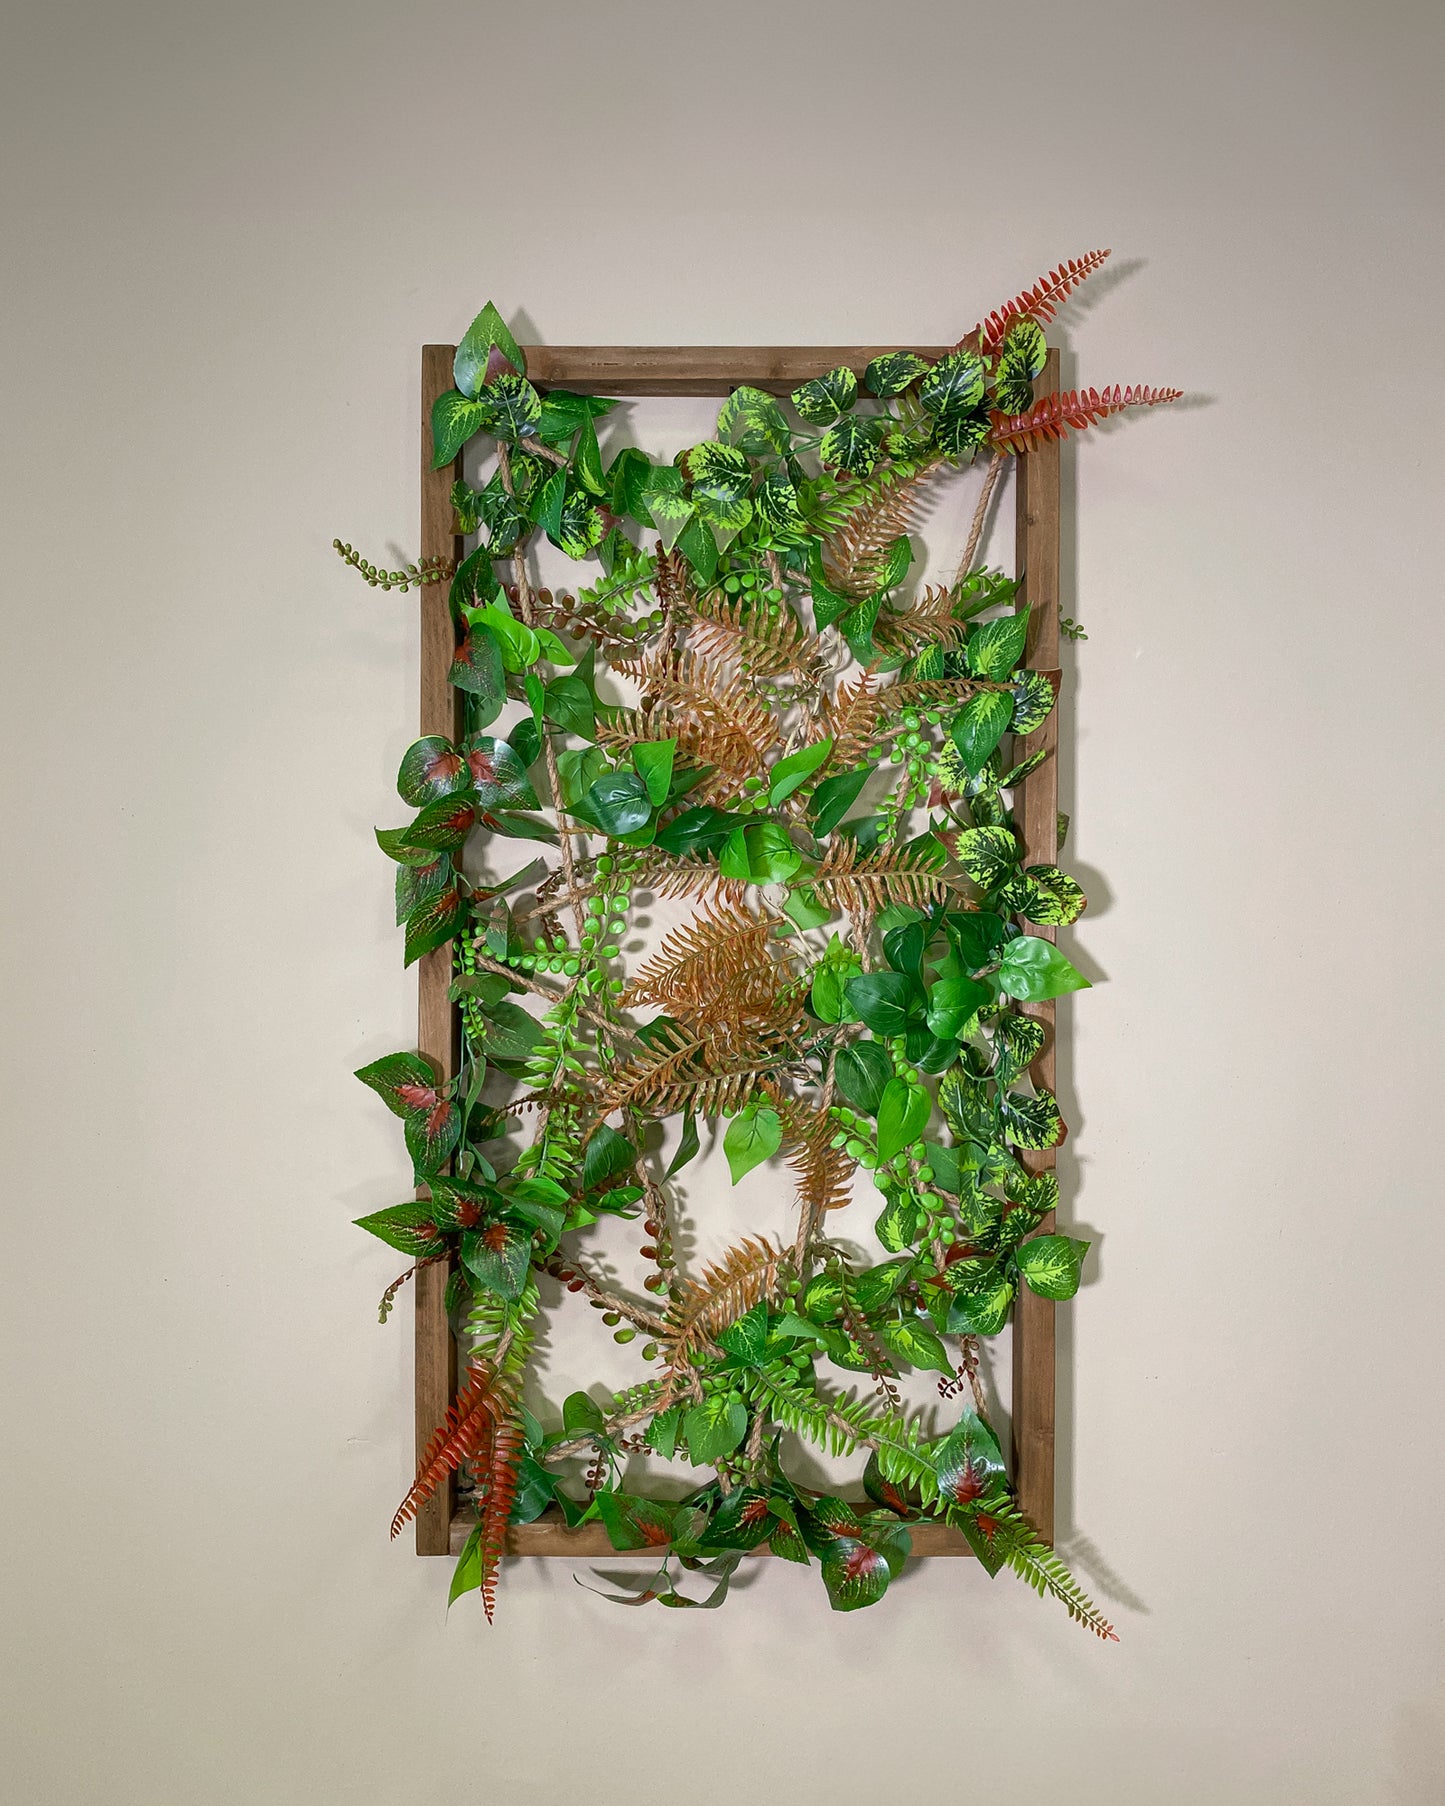 Plantframe/Pflanzenwand/Mooswand "PANAY" aus Realtouch Kunstpflanzen mit Fichtenholzrahmen